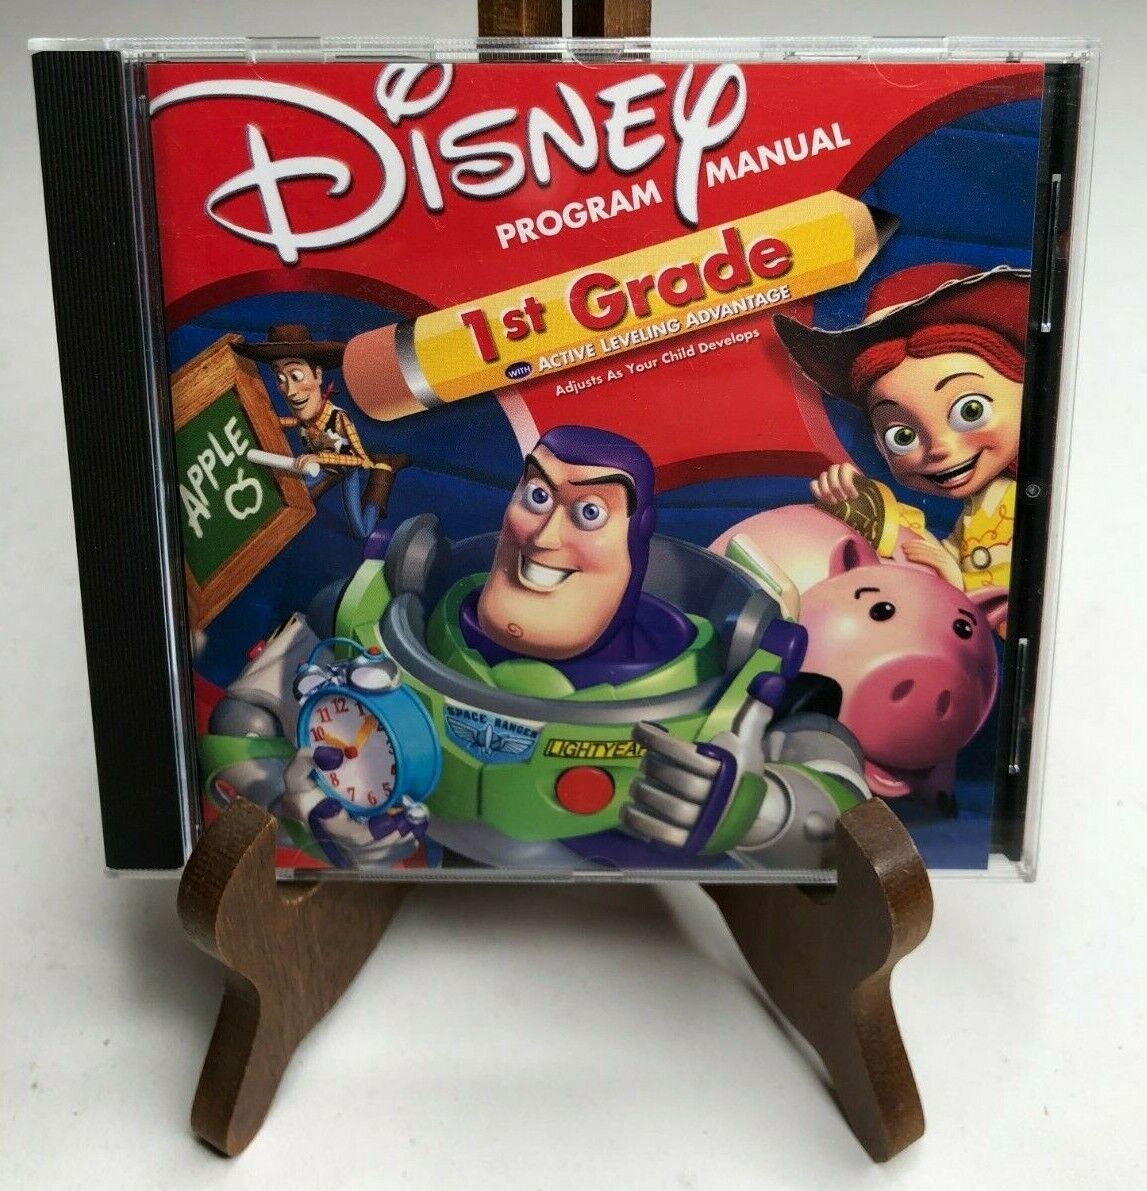 Disney Pixar's Buzz Lightyear 1st Grade Program Manual CD - FAST SHIPPING